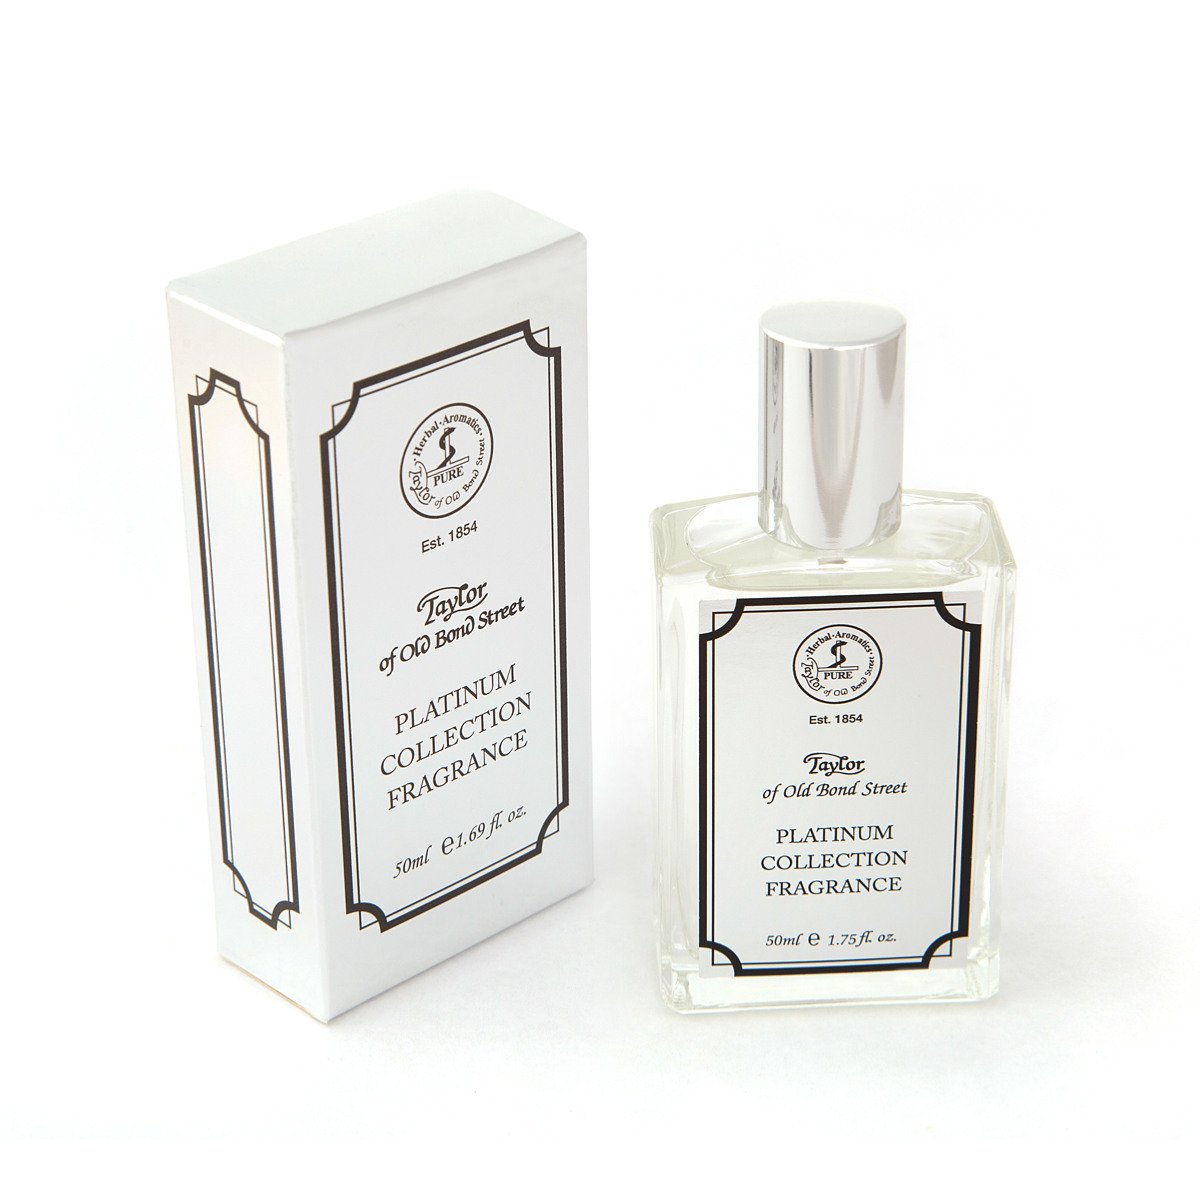 Platinum Collection fragrance 50ml